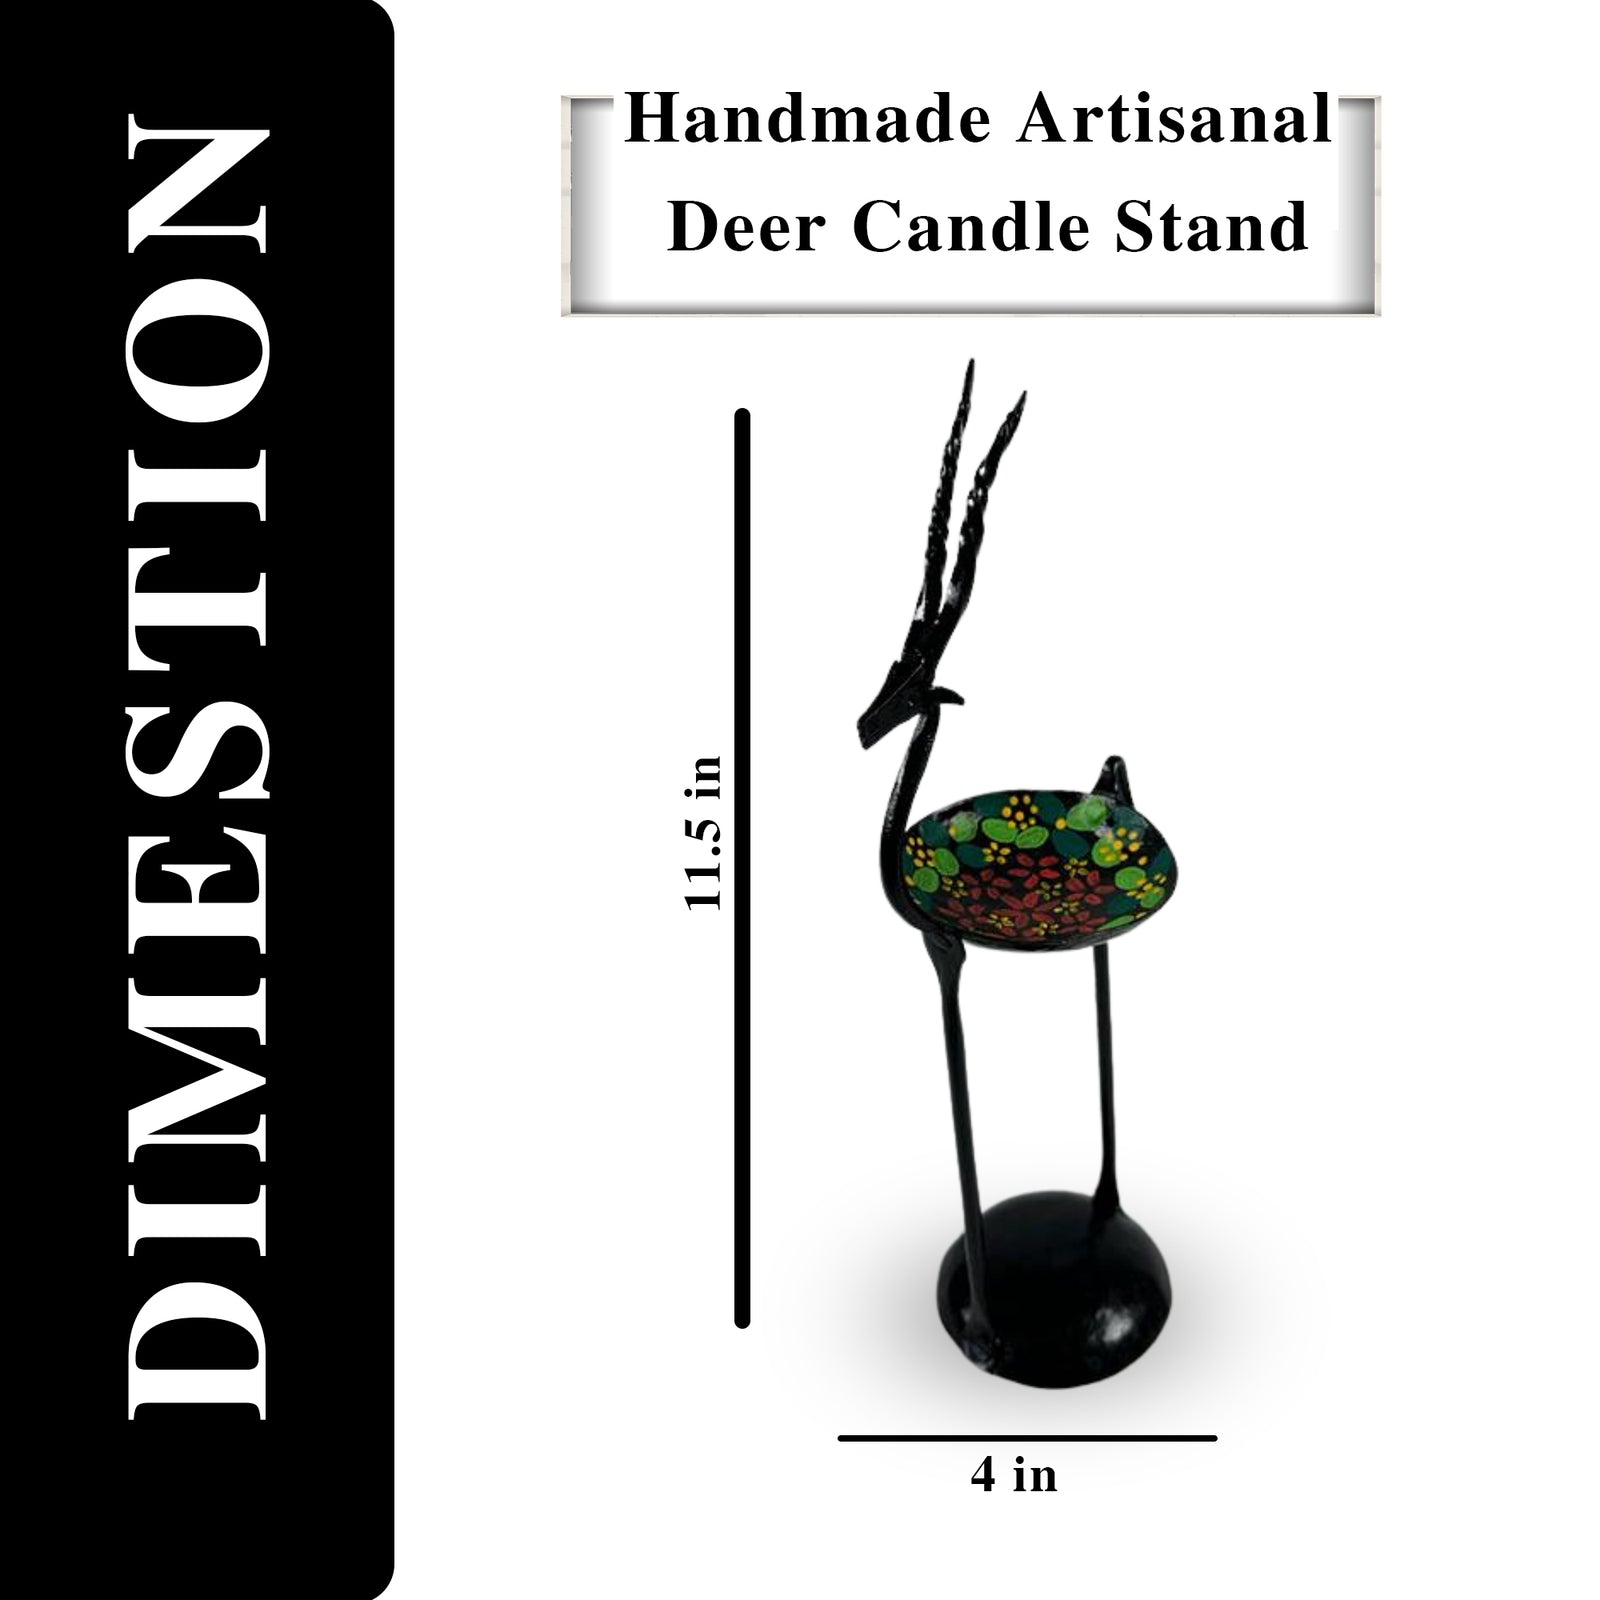 Handmade Artisanal Deer Candle Stand